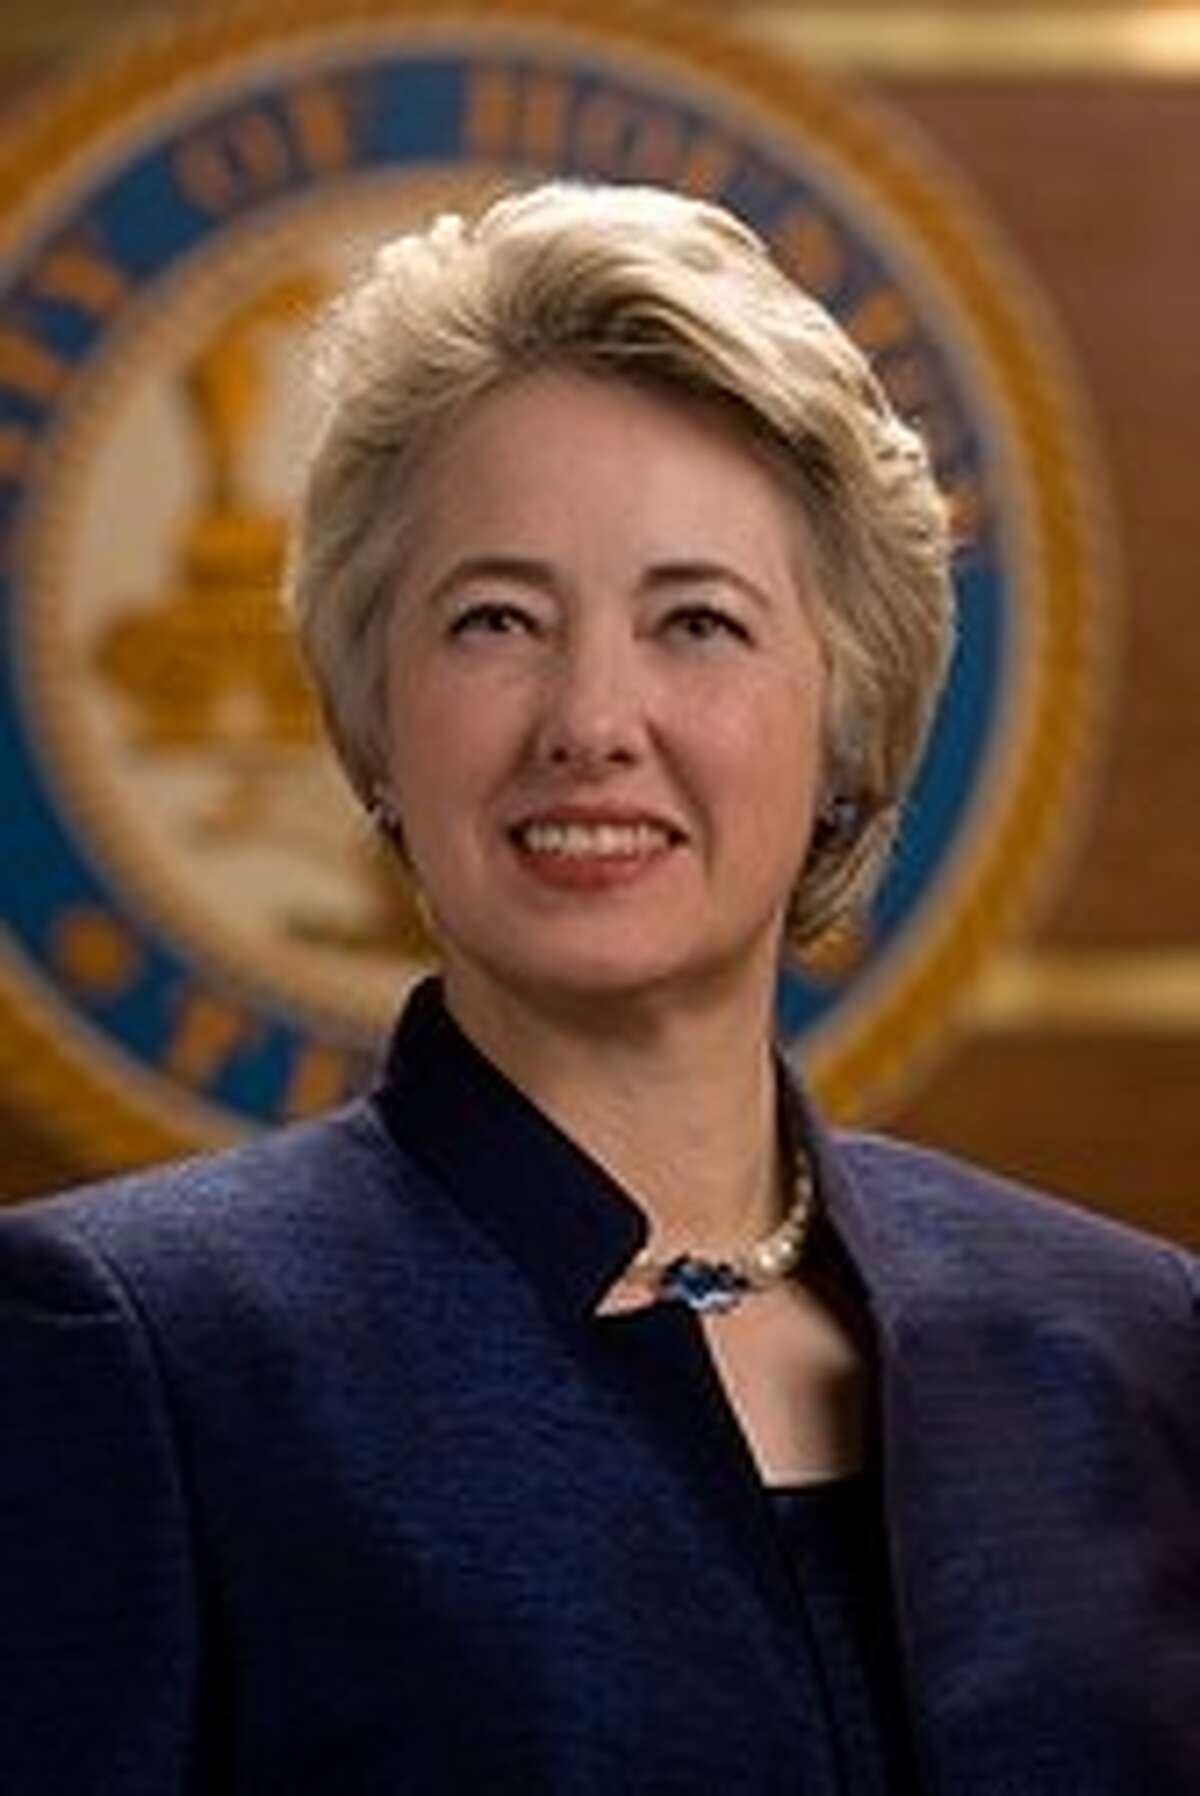 Houston Mayor Annise D. Parker